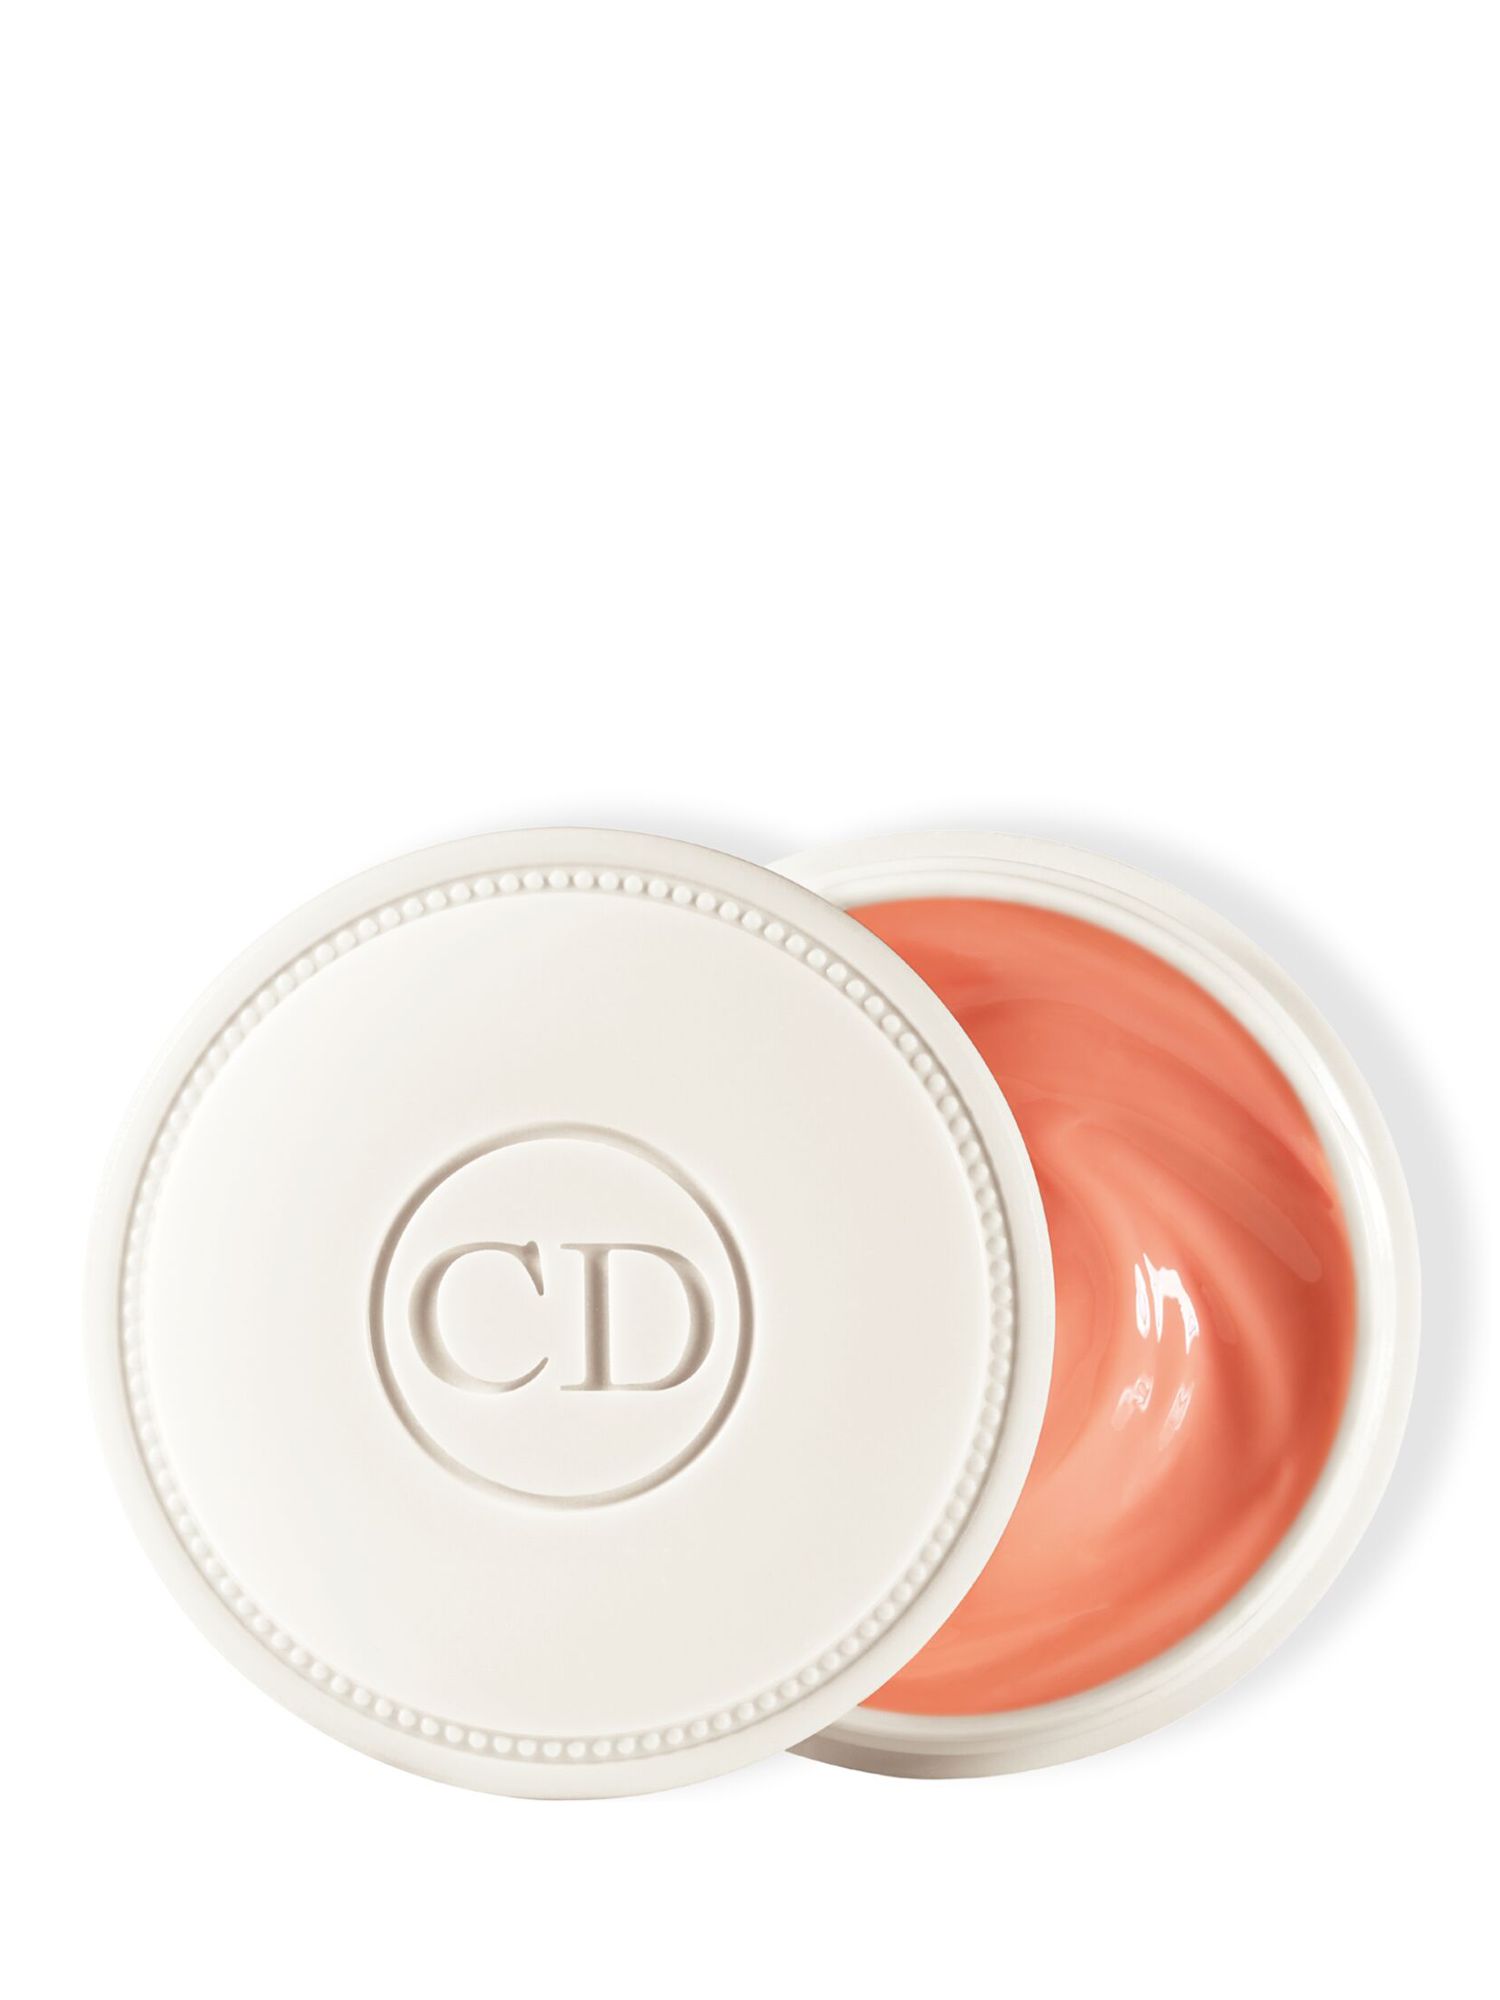 dior creme abricot limited edition